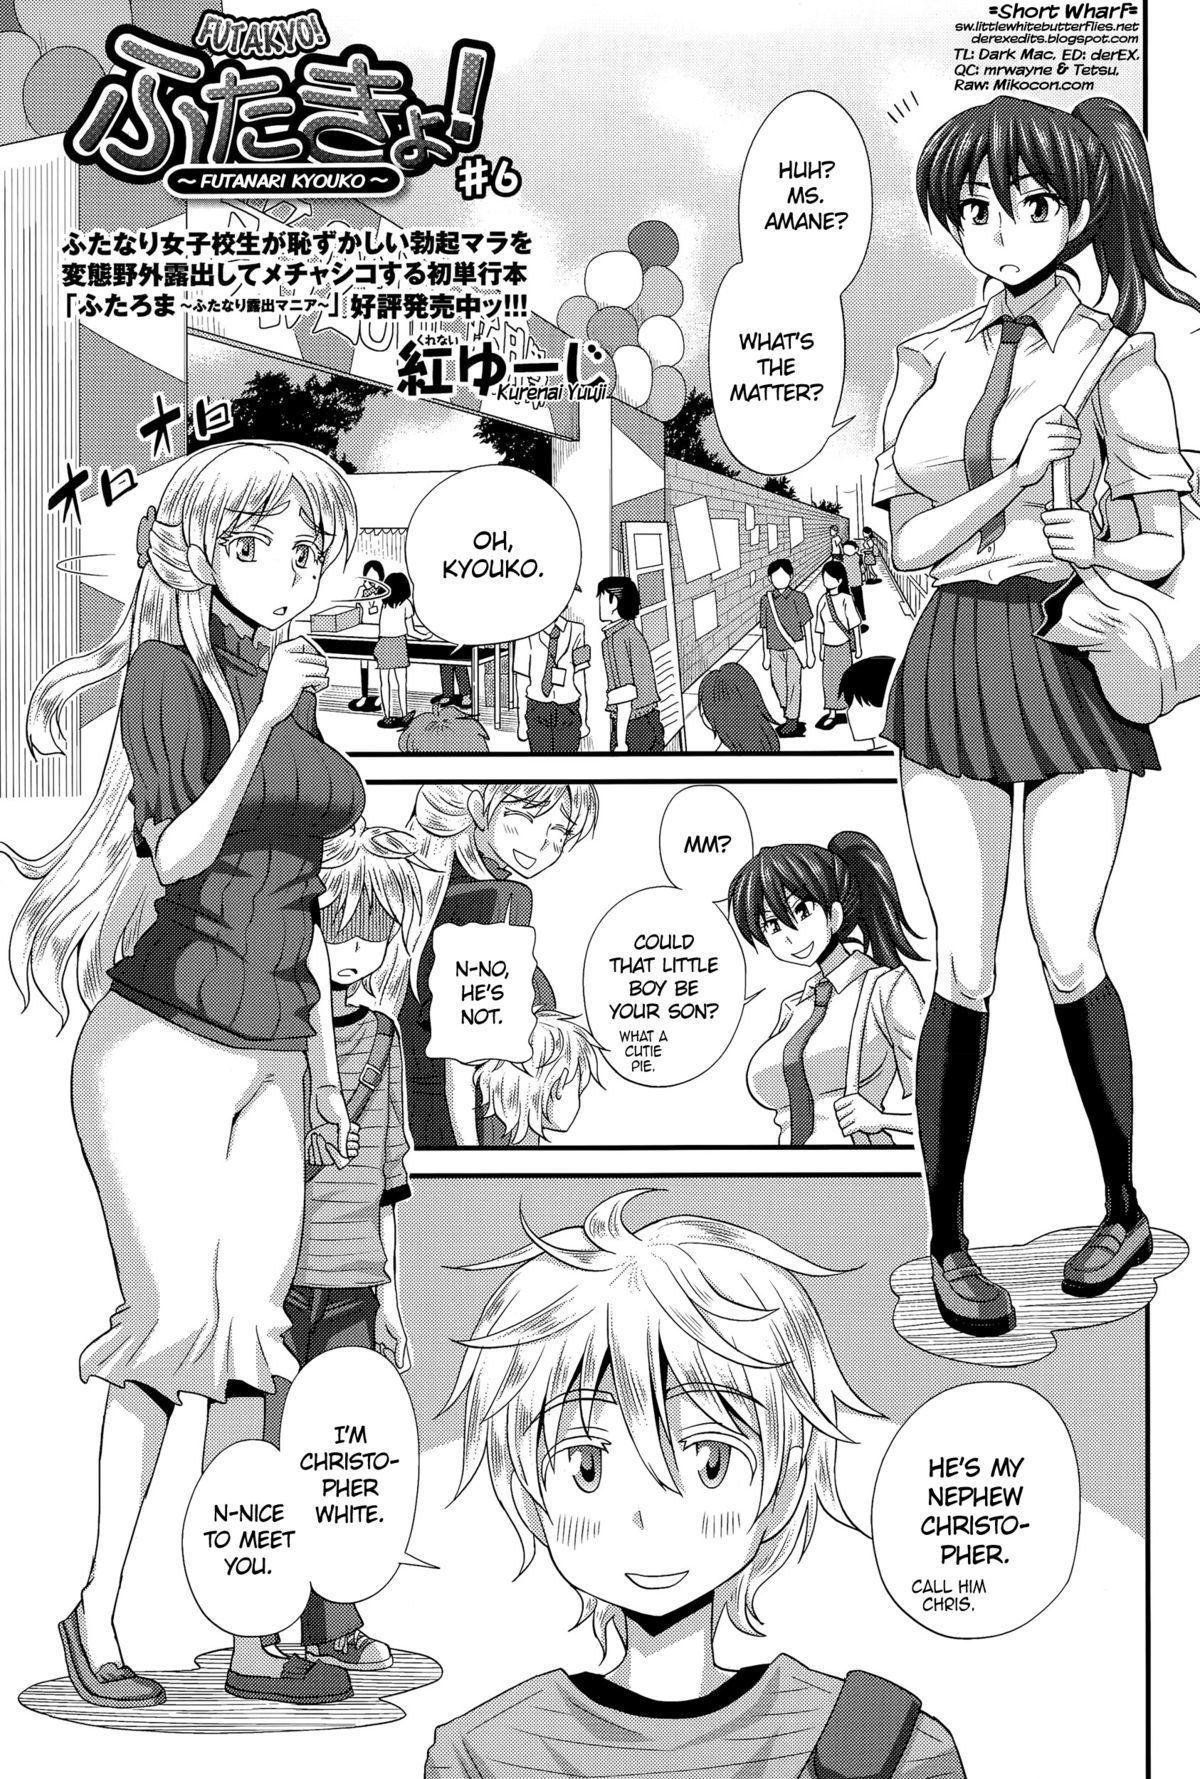 1200px x 1779px - Futa on Male FutaKyo!#6 Shota Manga by Kurenai Yuuji | Futapo!